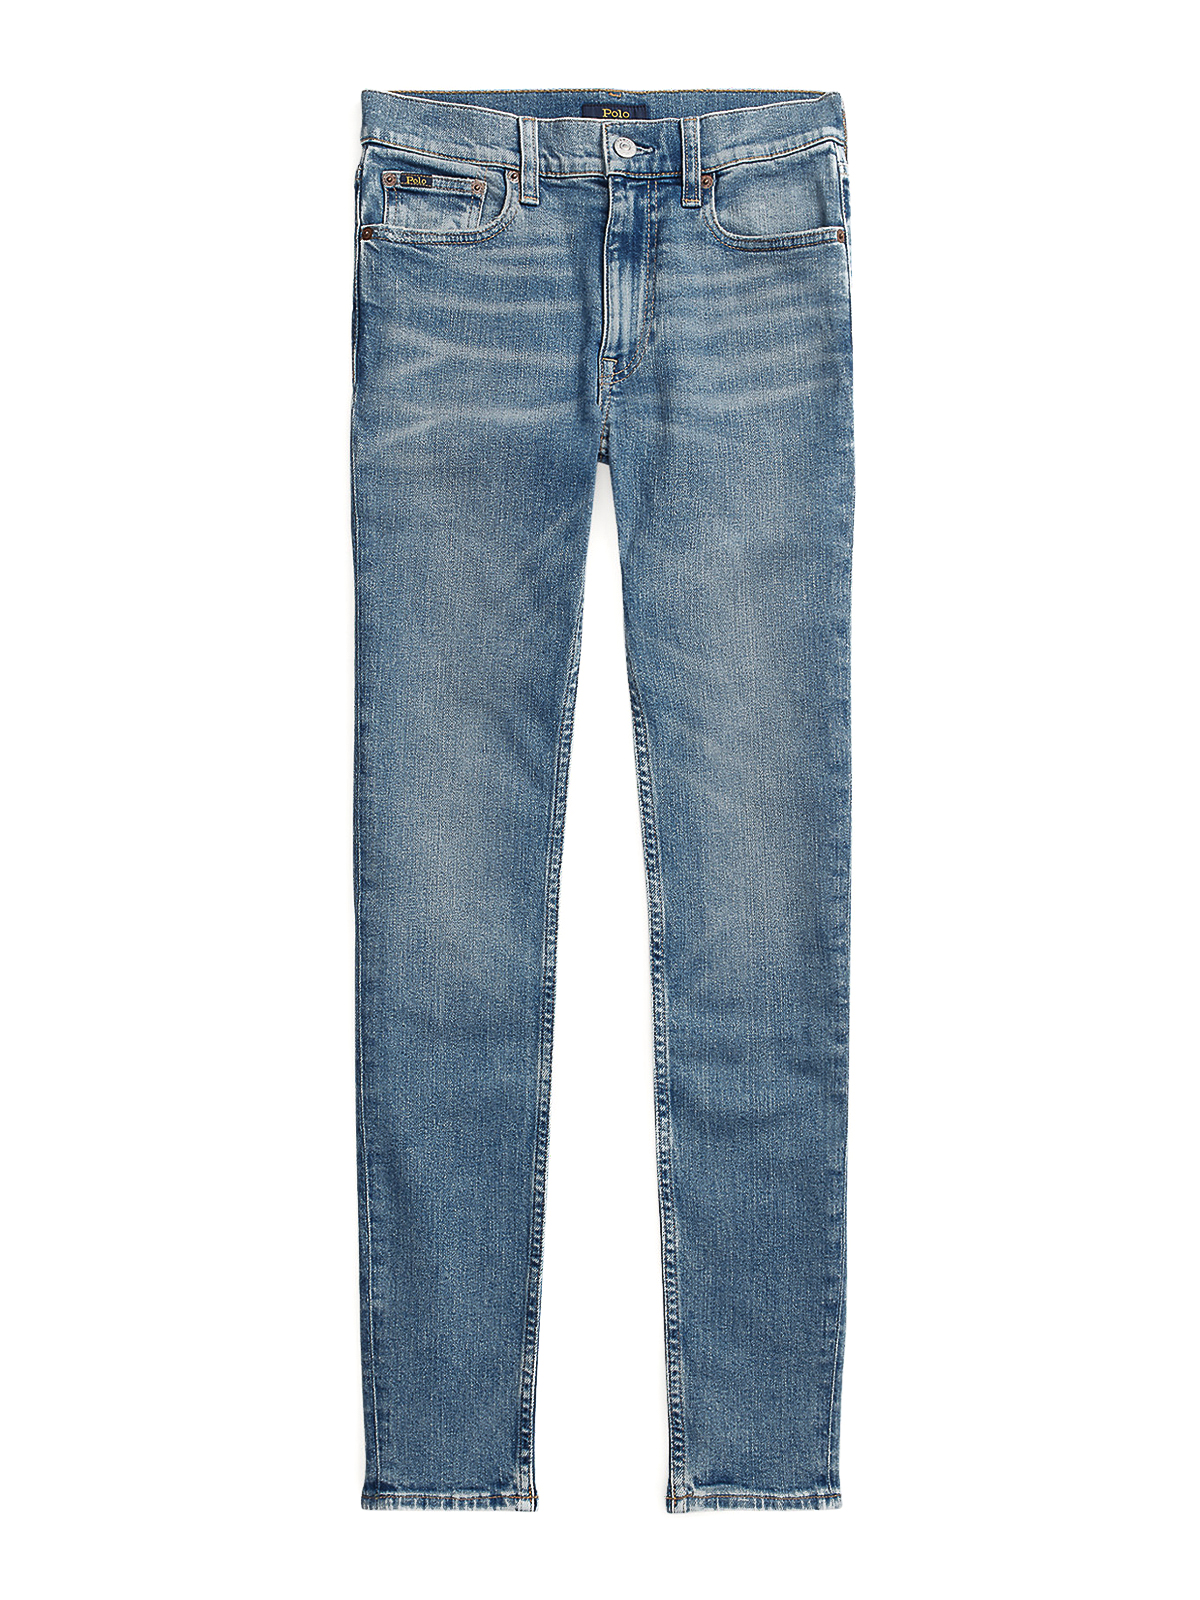 Polo Ralph Lauren Tompkins Jeans In Light Wash